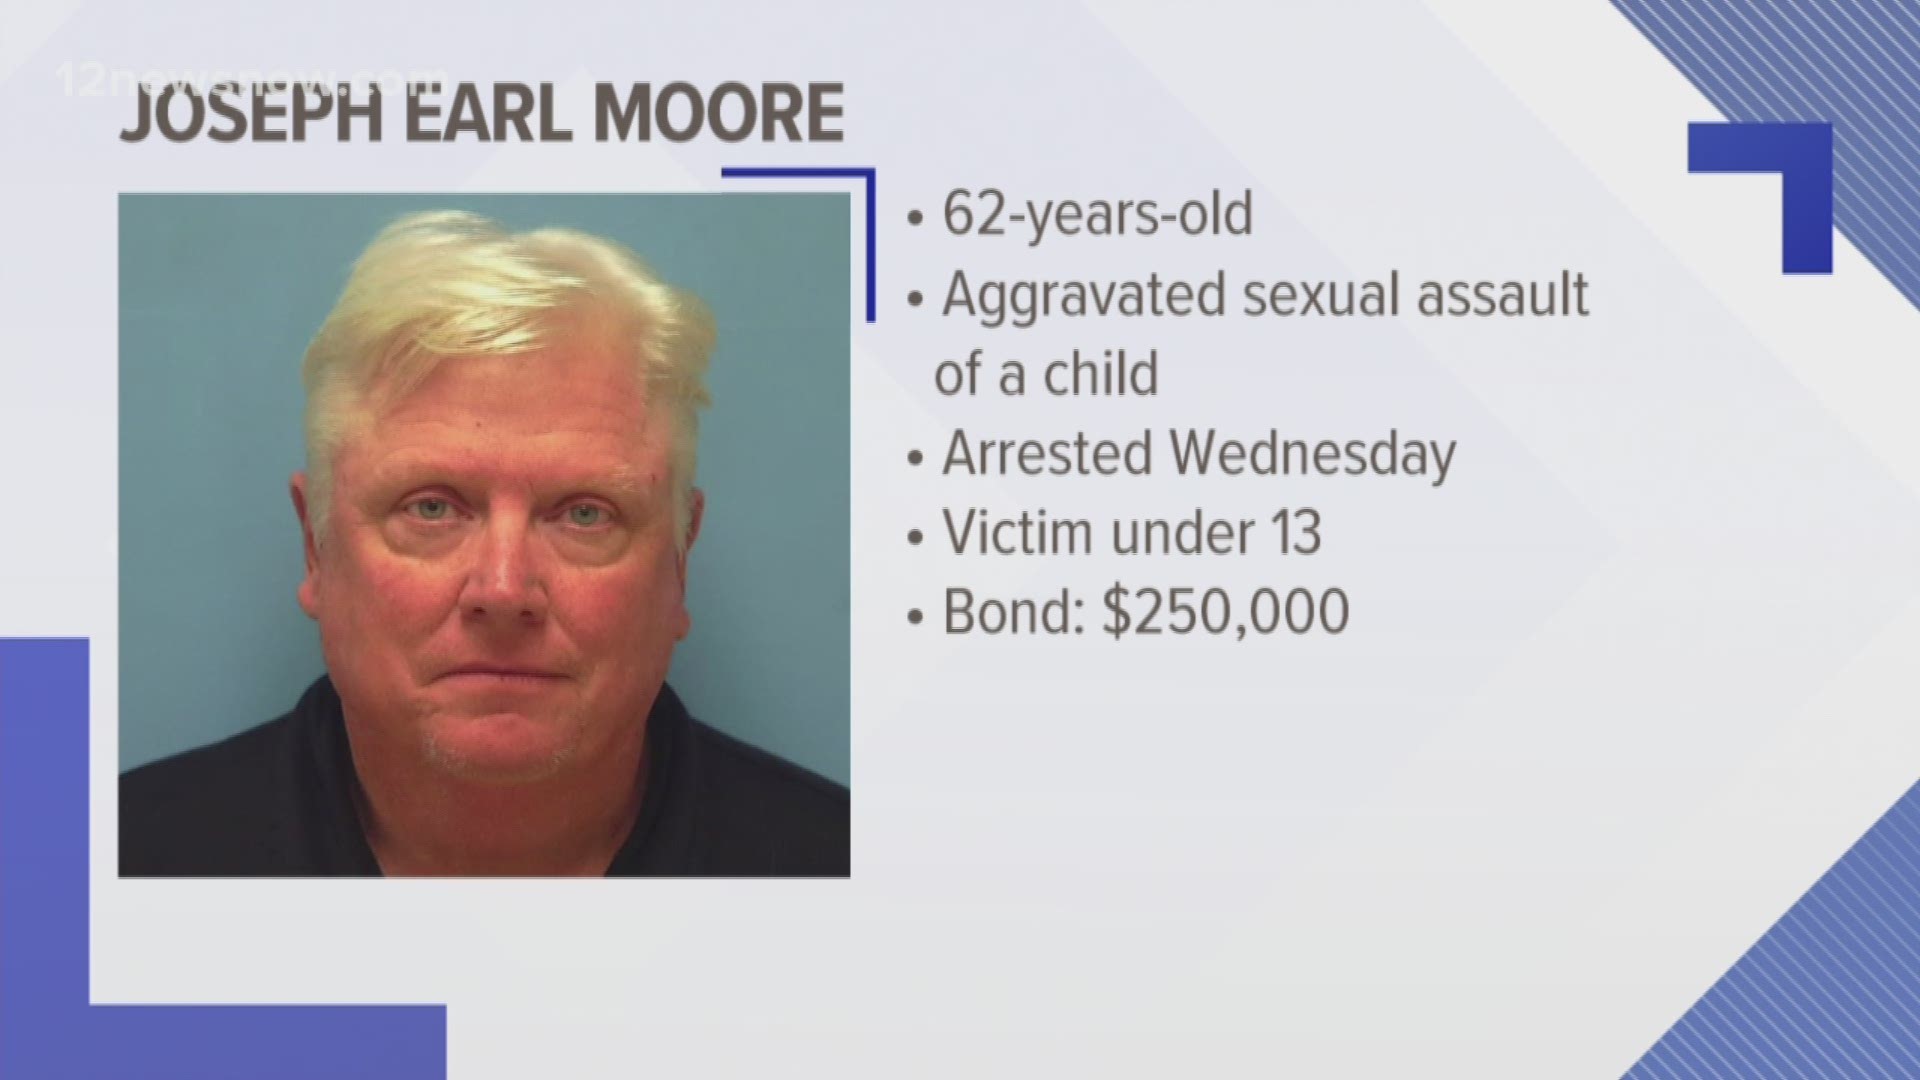 Joseph Earl Moore's bond is set at $250,000.